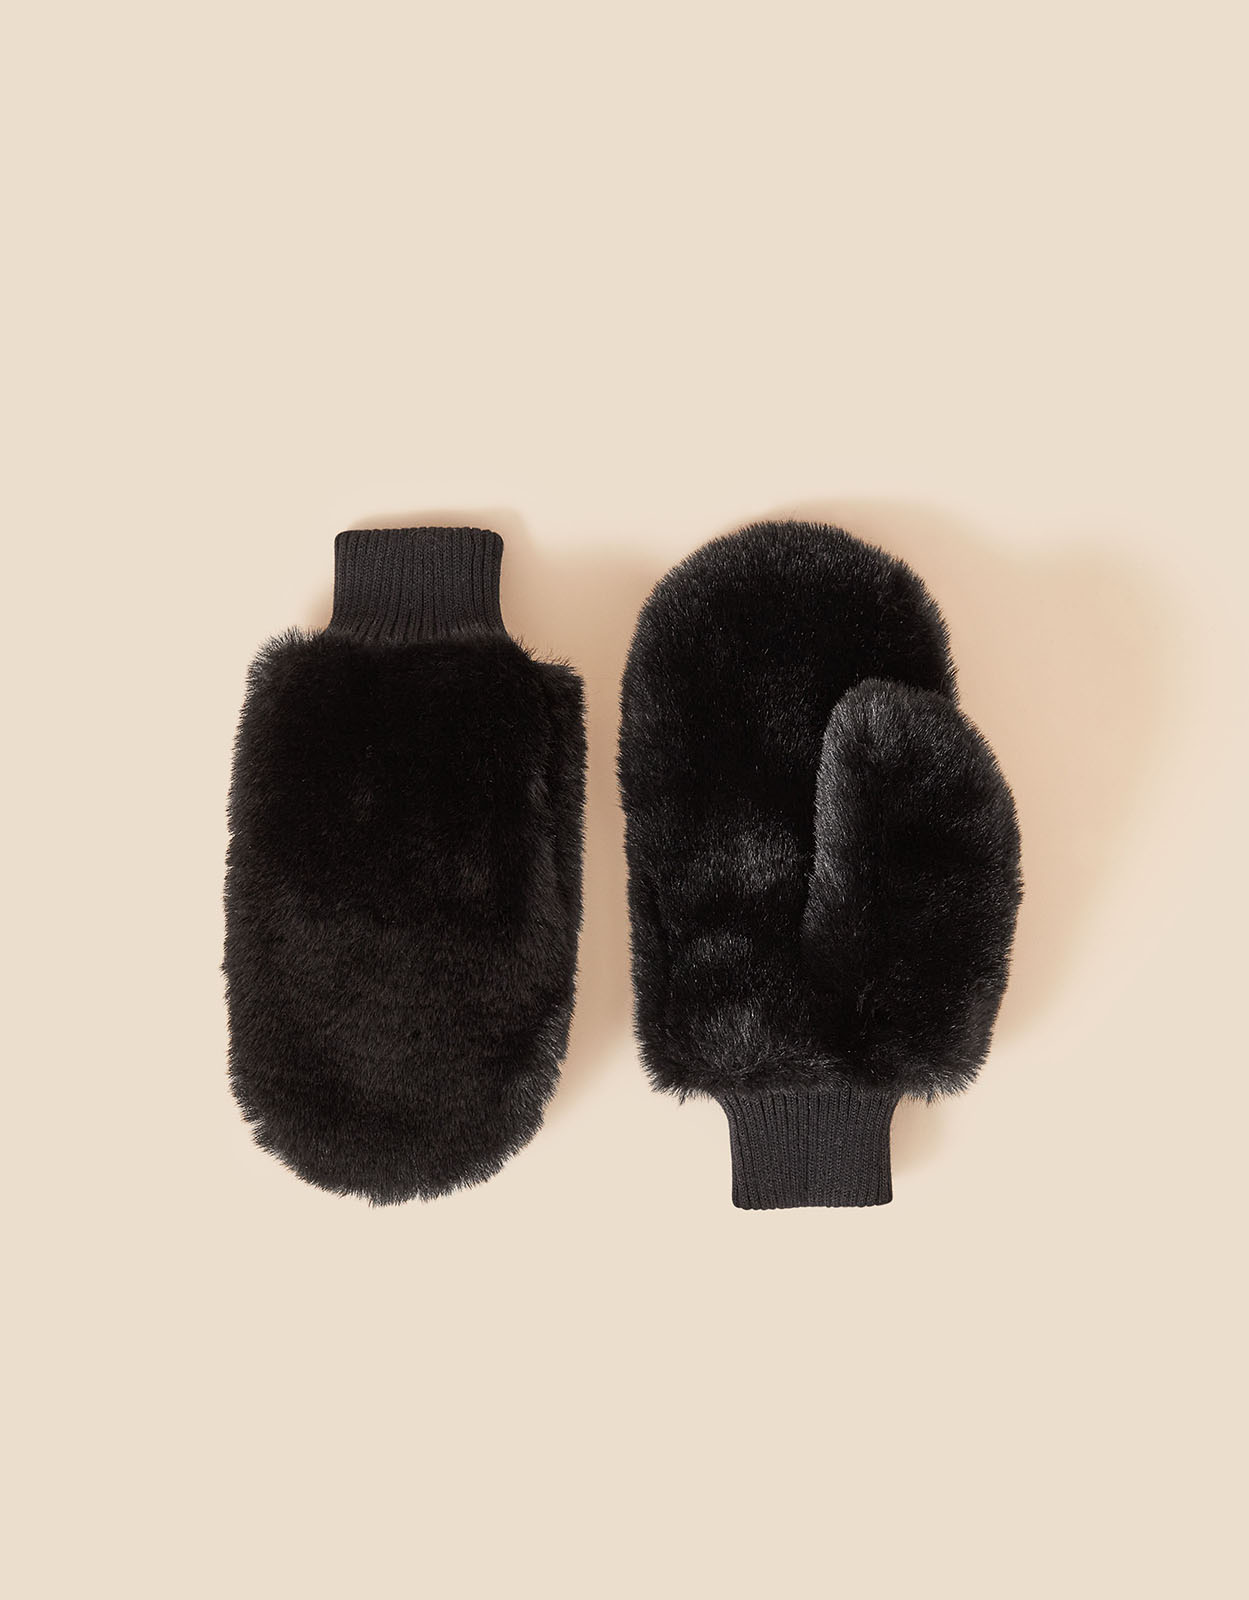 Accessorize Women's Black Faux Fur Mittens, Size: One Size